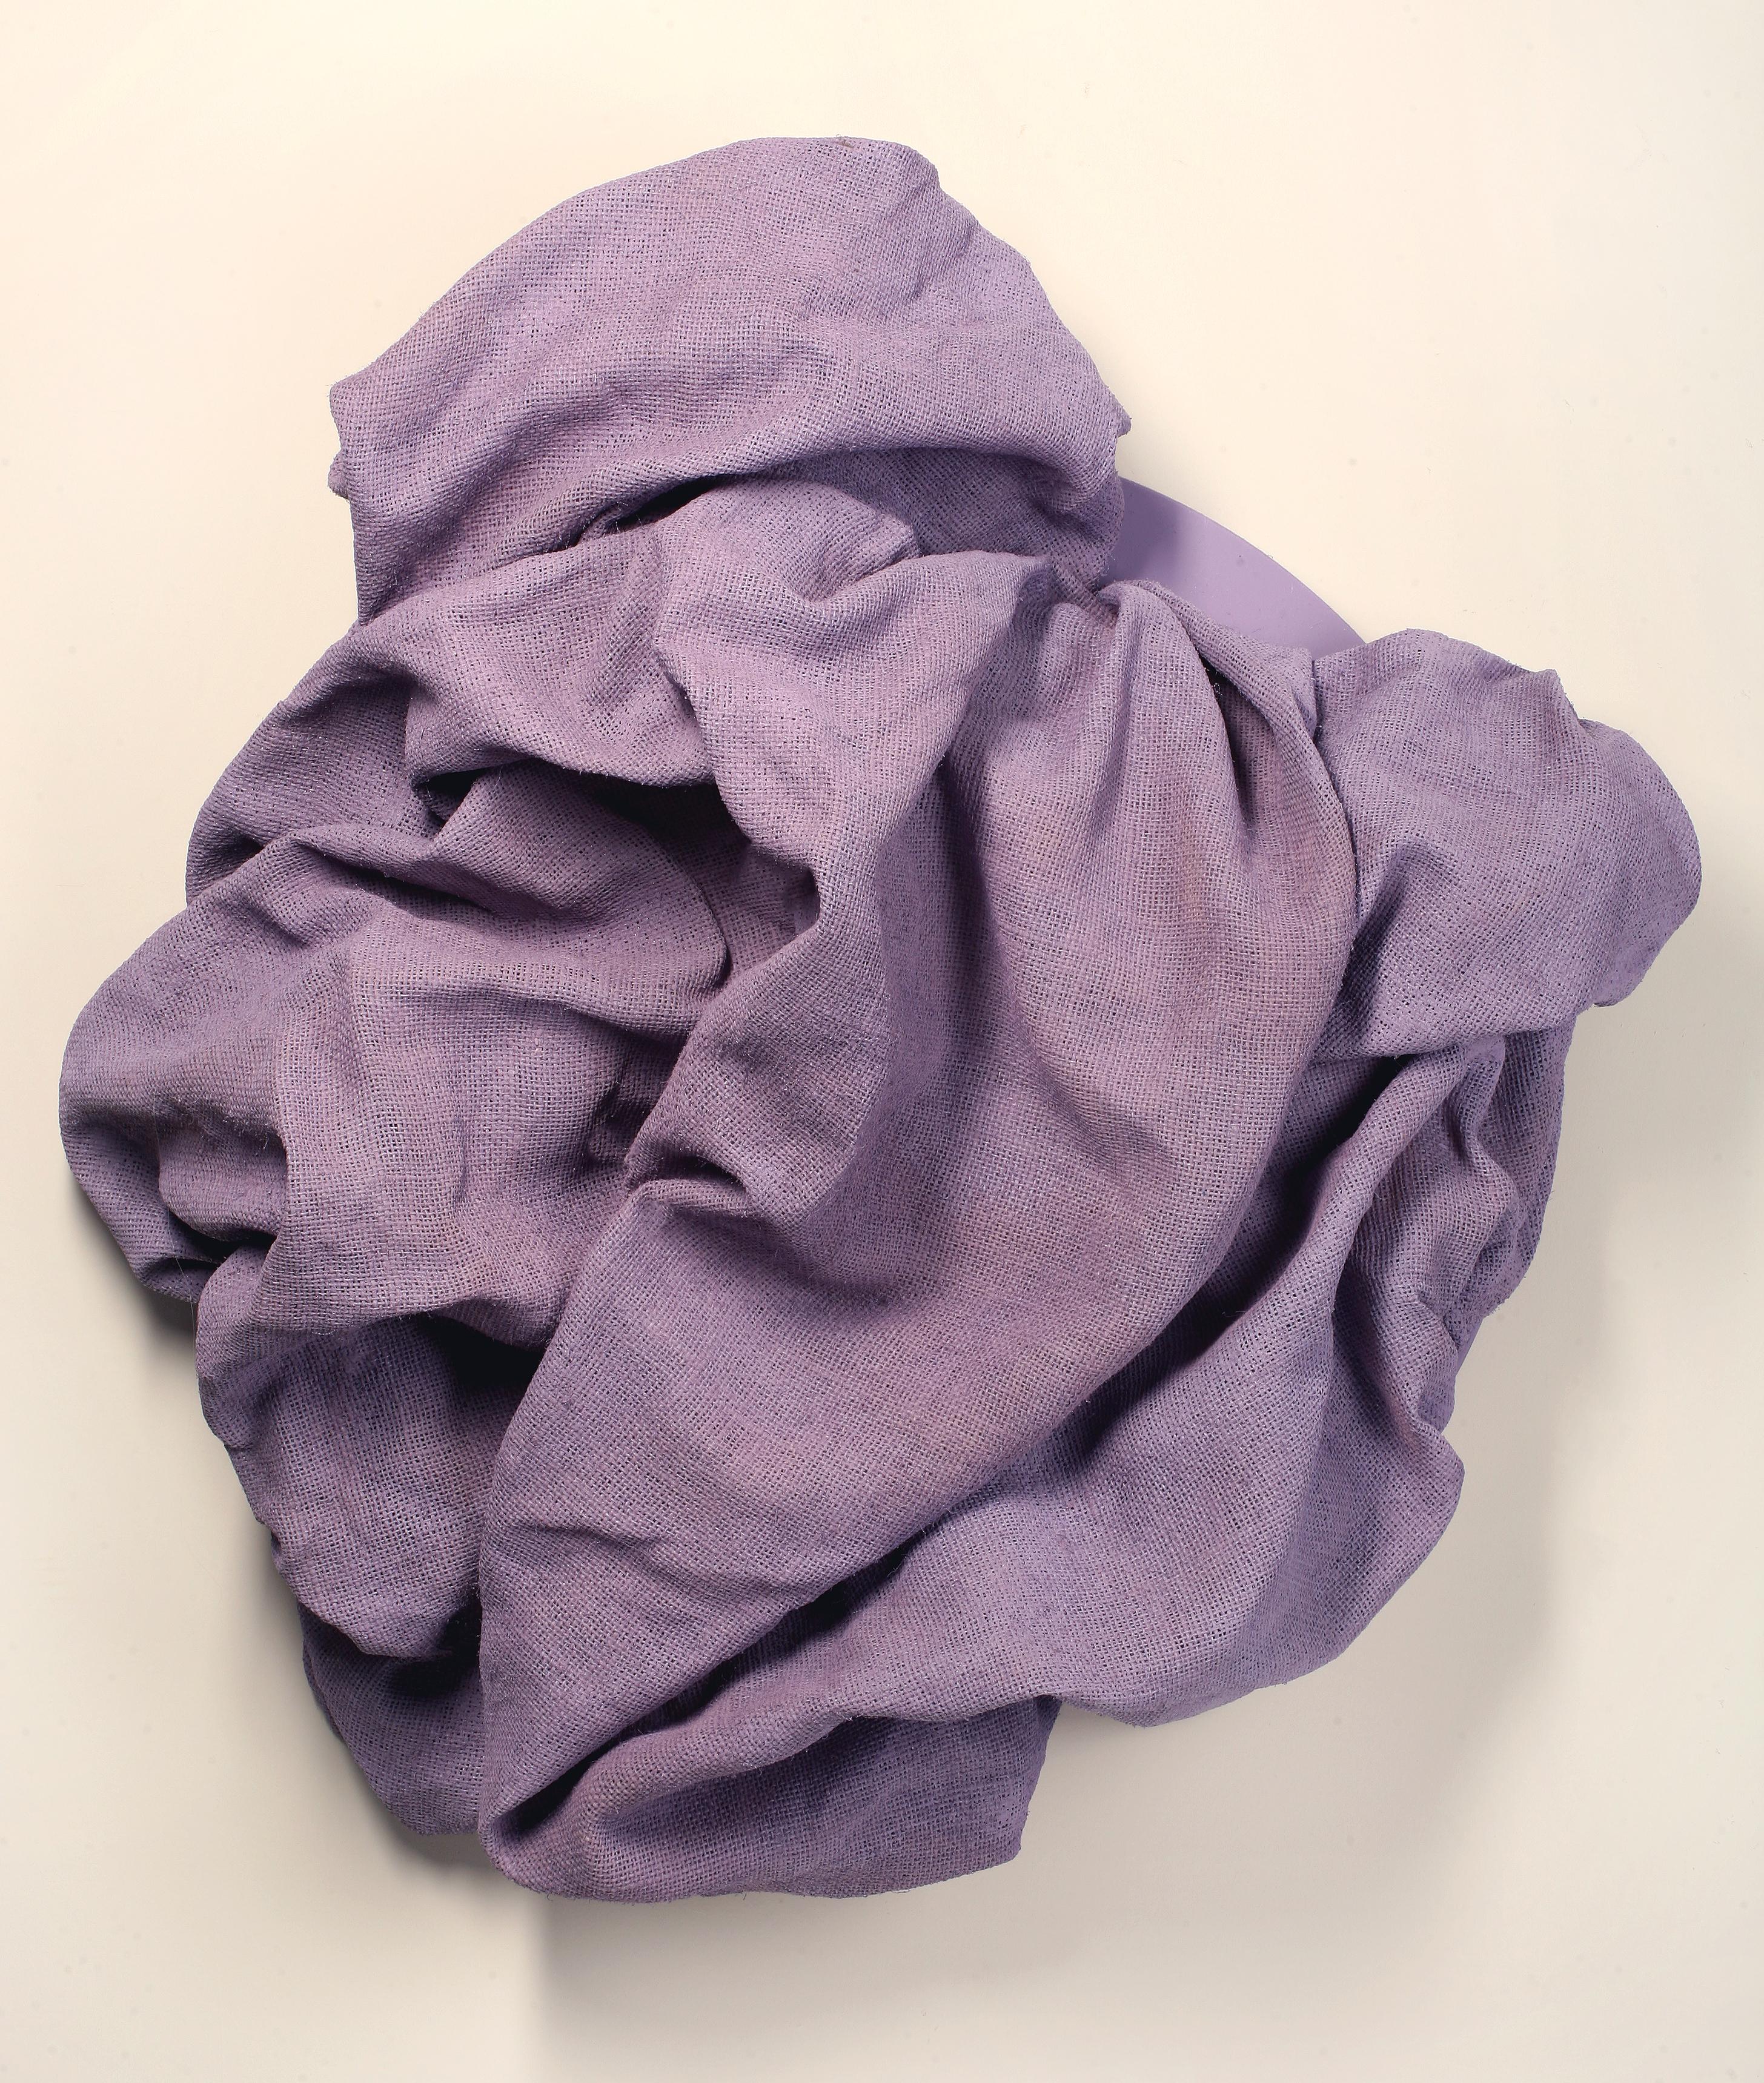 Chloe Hedden Abstract Sculpture - "Lavender Folds" Wall sculpture- fabric, monochrome, monochromatic, purple, mcm